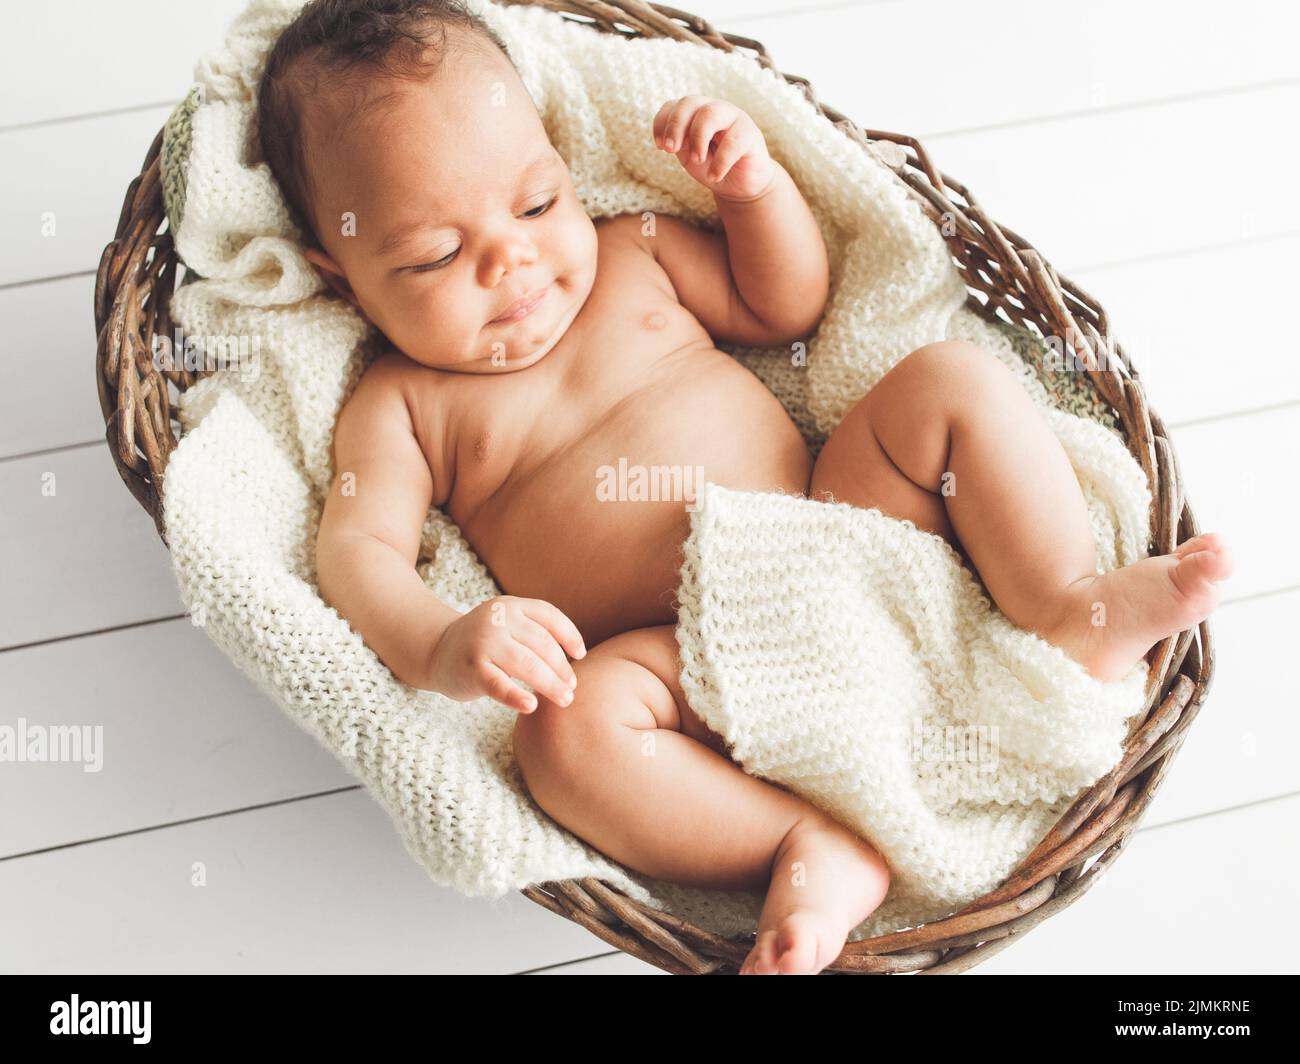 newborn beauty tenderness purity innocence Stock Photo